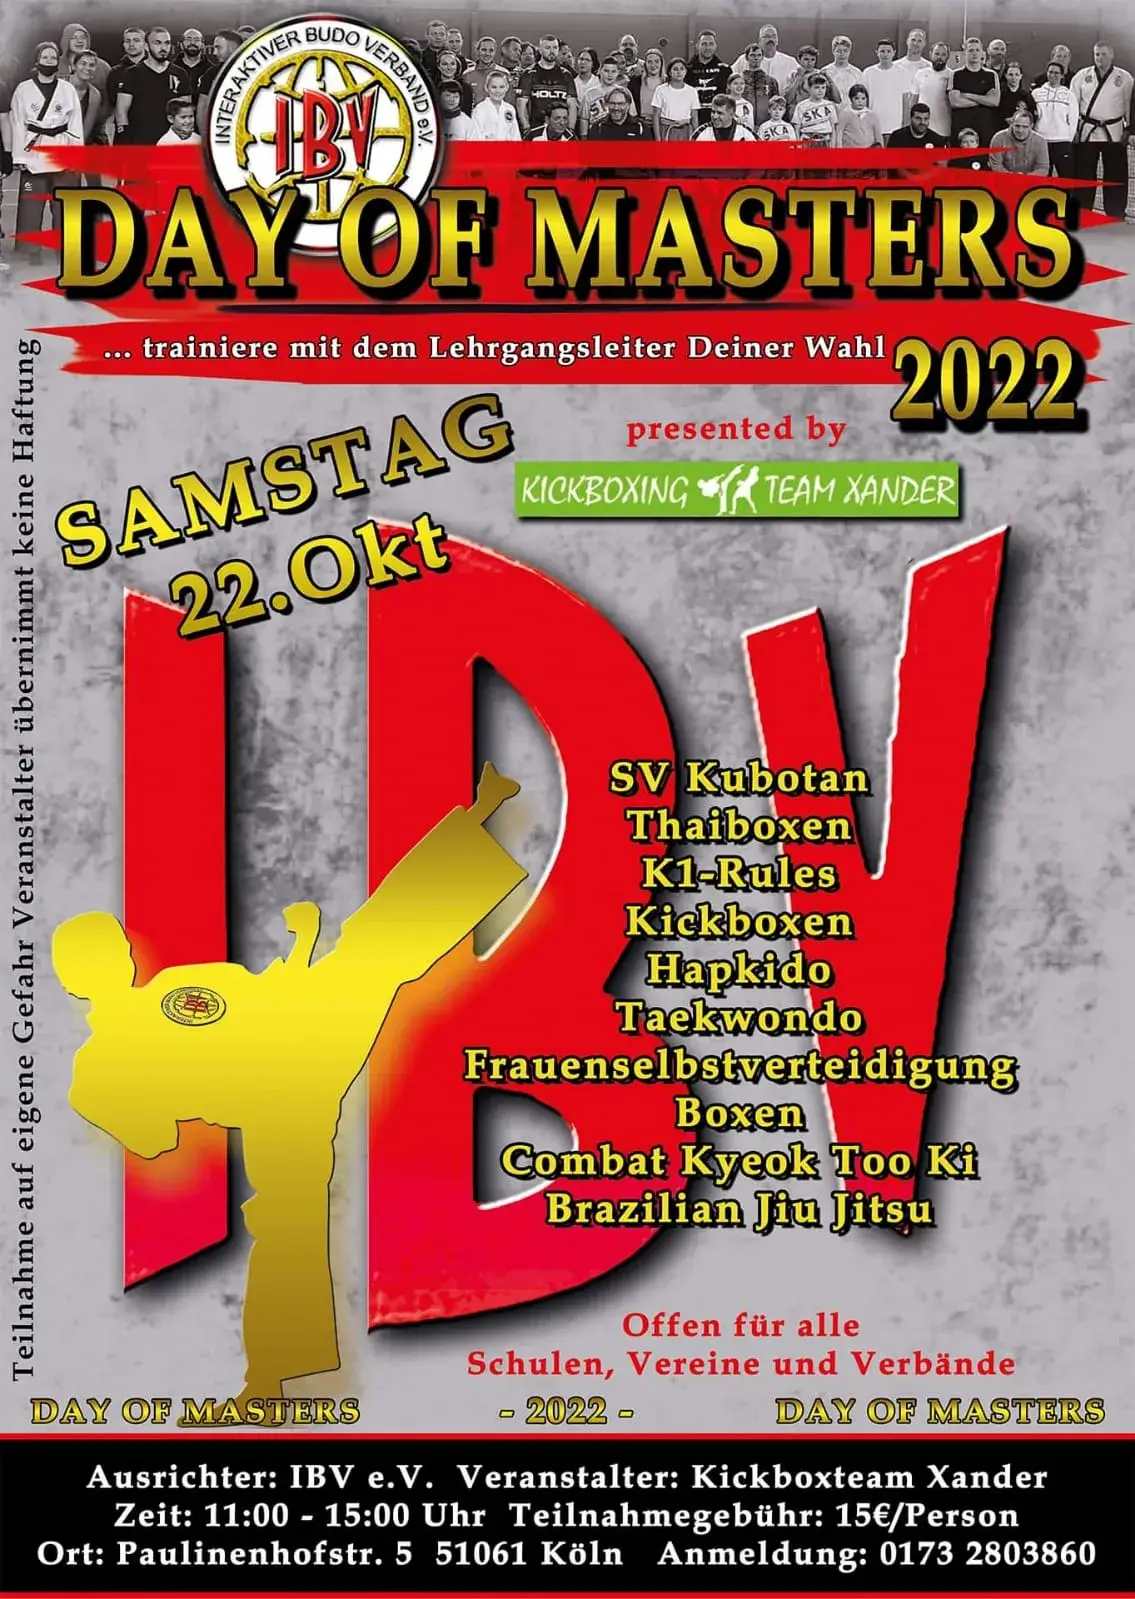 Day of Masters 2022 am 22. Oktober 2022 in Köln